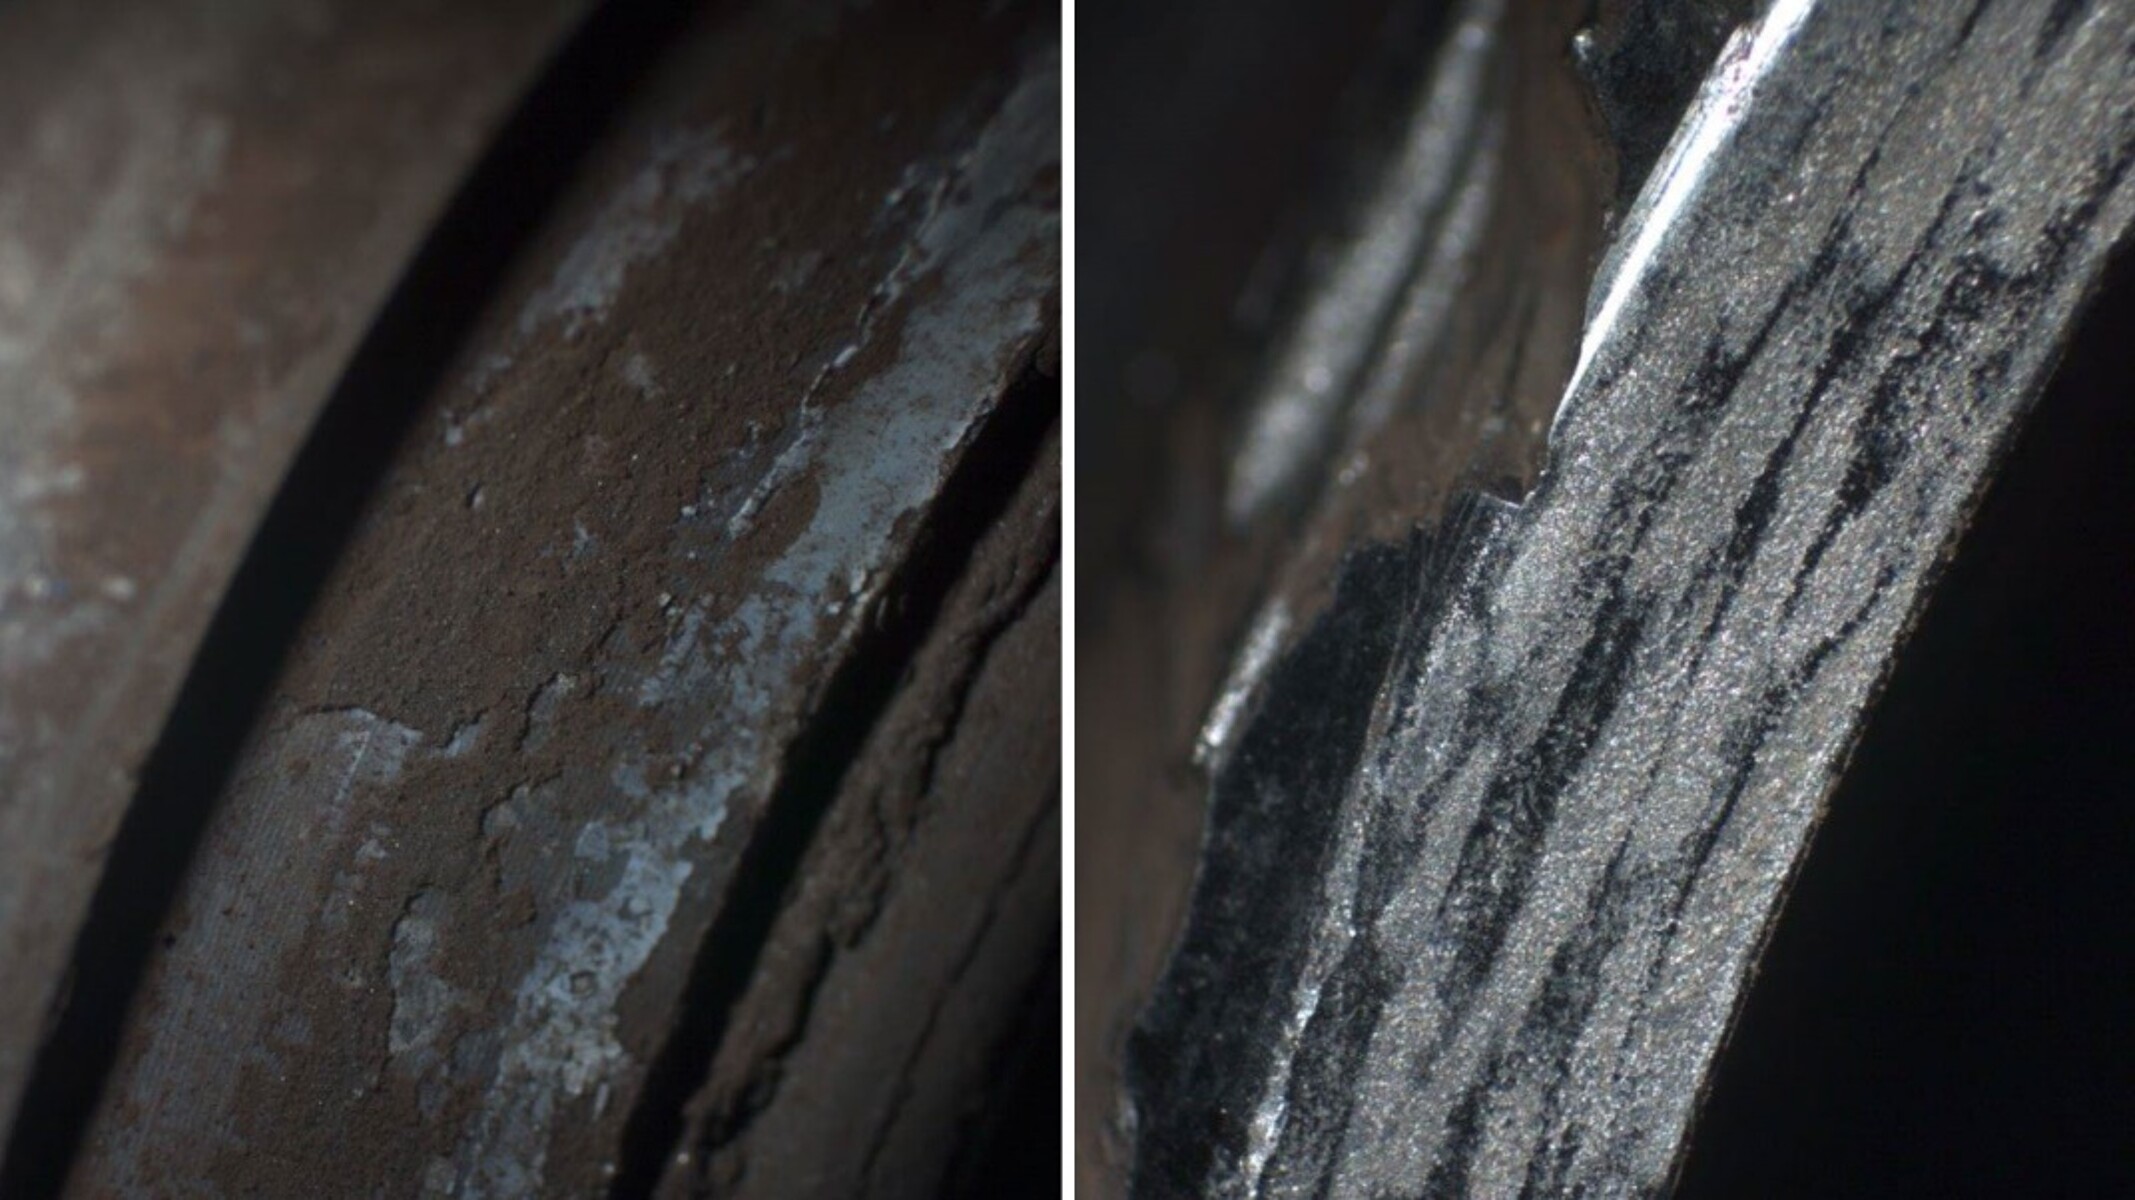 Magnetite deposits on ferrous metal